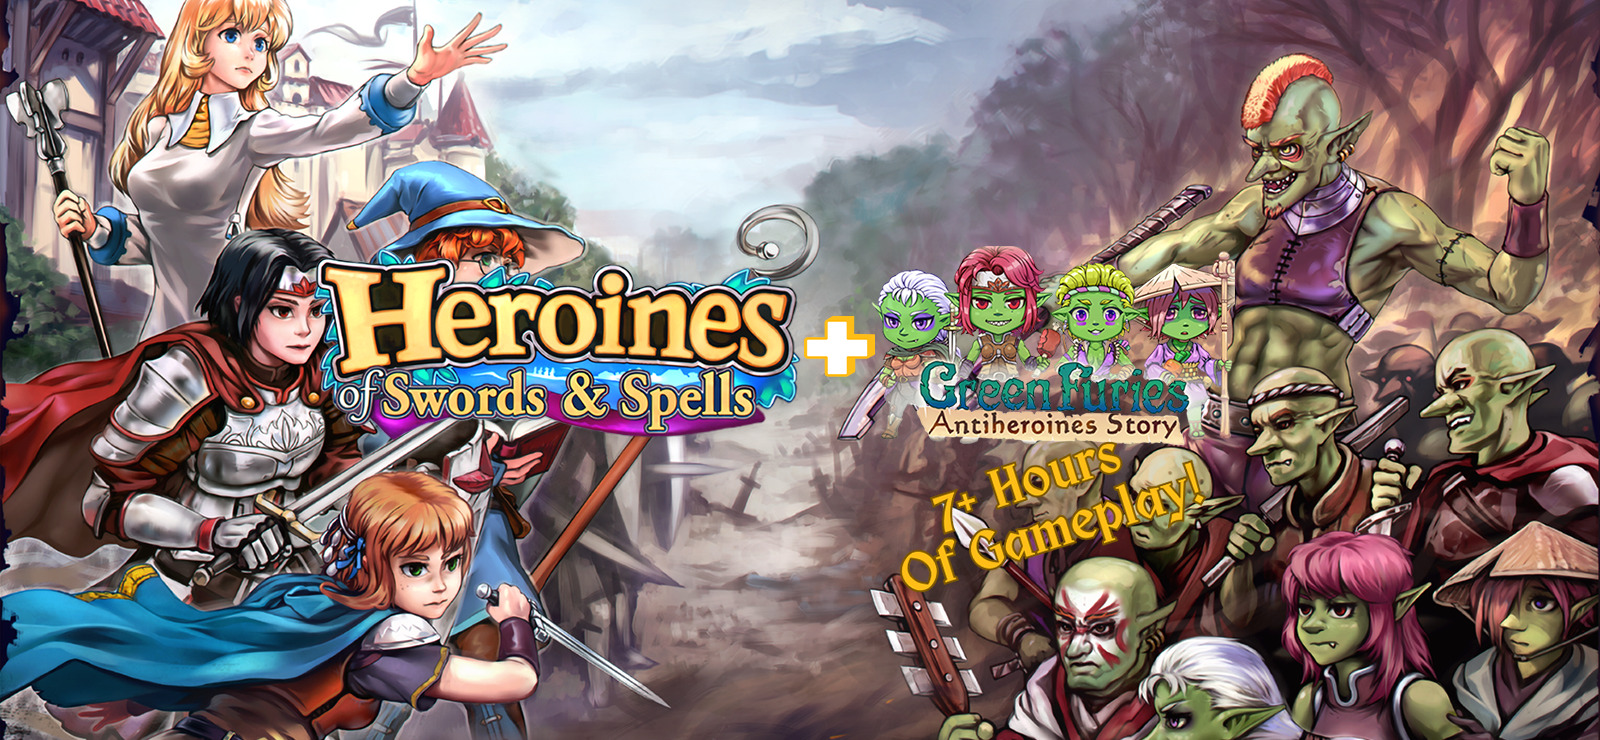 Heroines of Swords & Spells + Green Furies DLC free instals